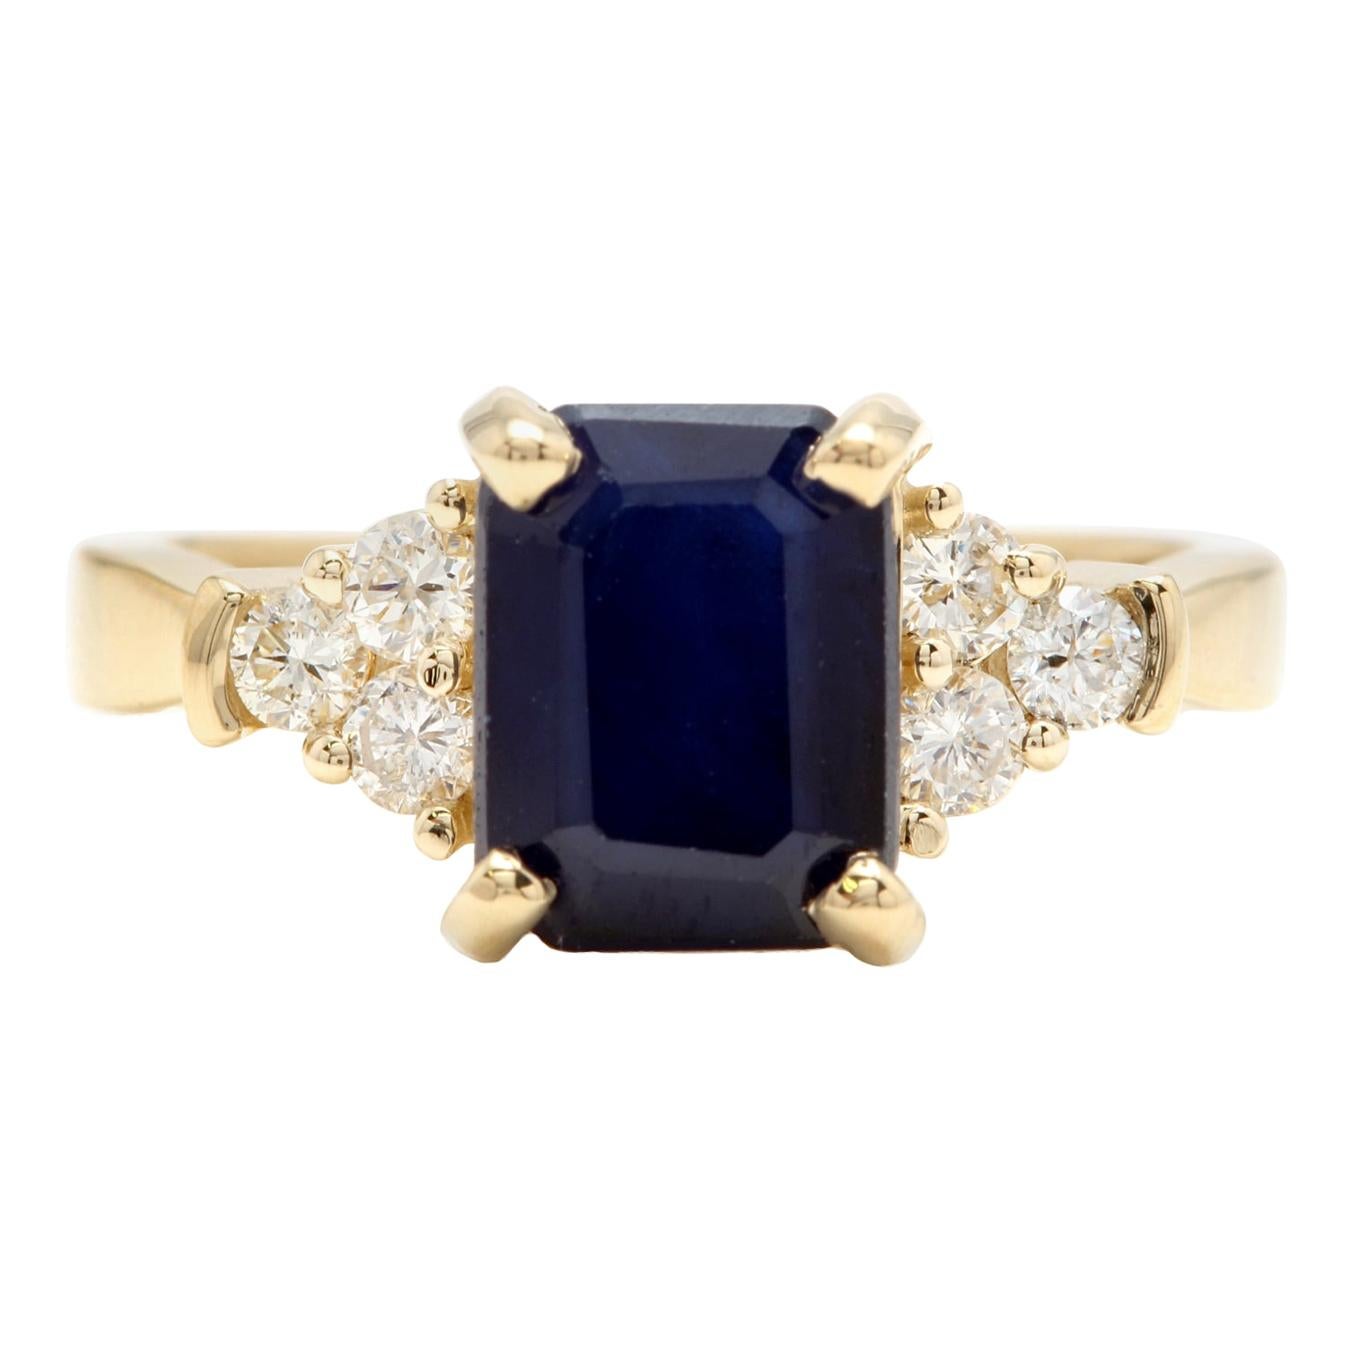 3.85 Carat Natural Sapphire and Diamond 14 Karat Solid Yellow Gold Ring